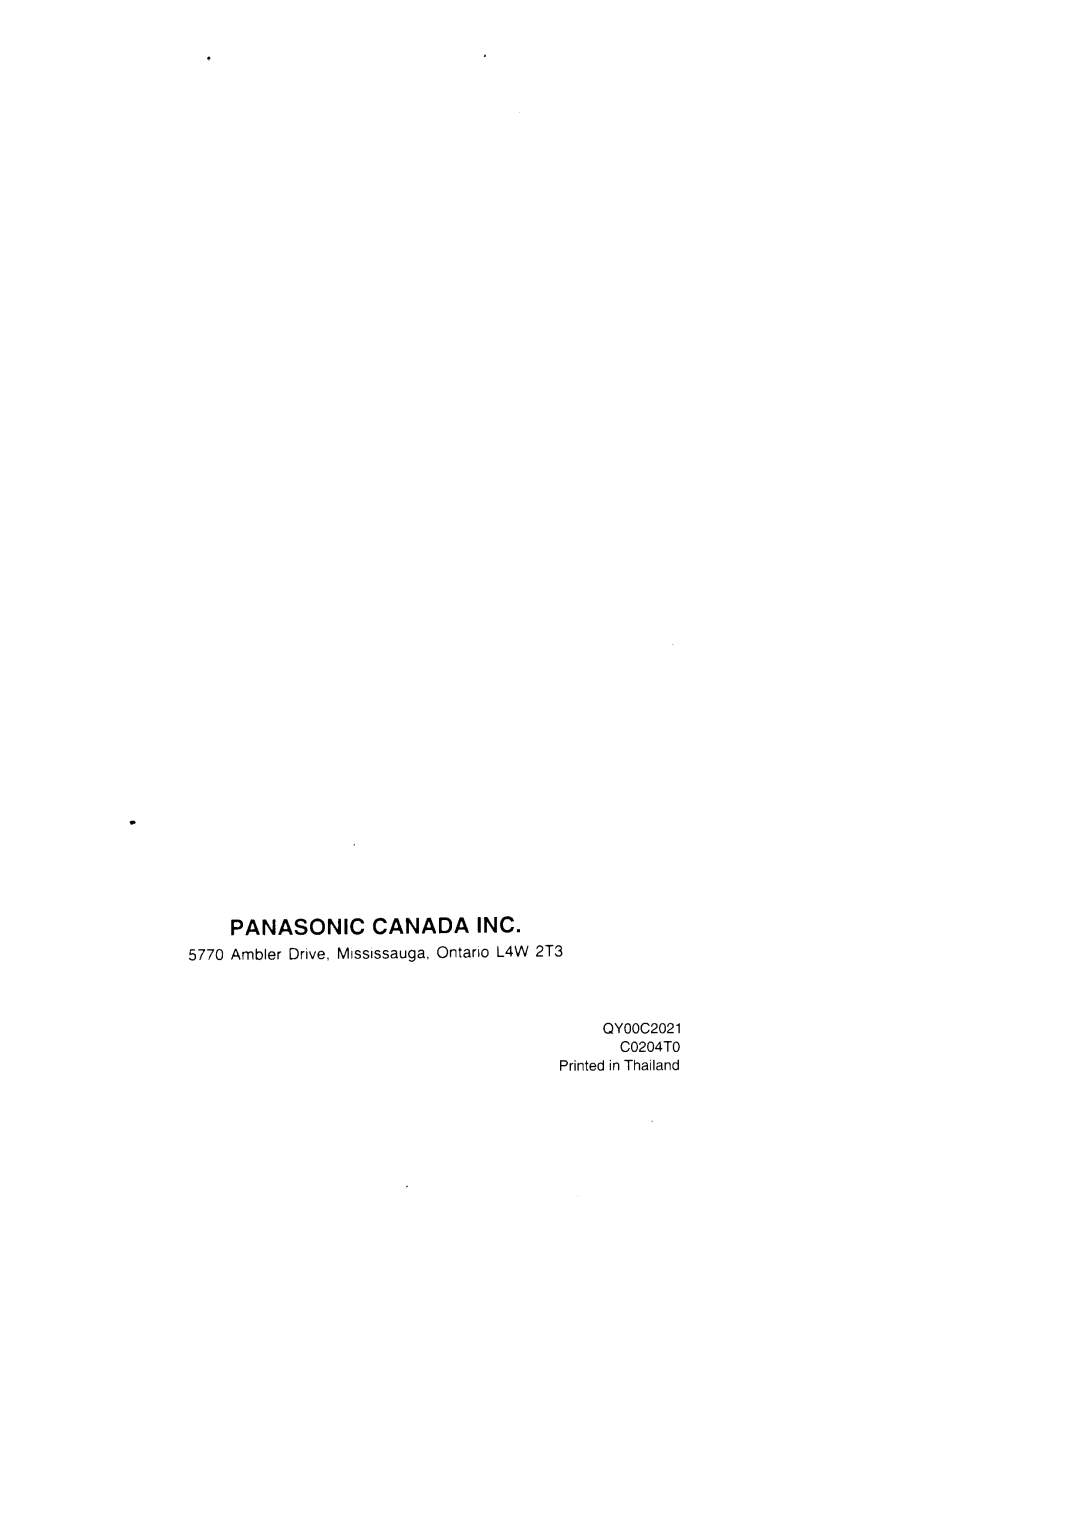 Panasonic W1ONAM18NA Panasoniccanadainc, 5770AmblerDrive,Mrssissauga,OntarioL4W 2T3, QY00c2021 c0204T0 PrintedThailand 